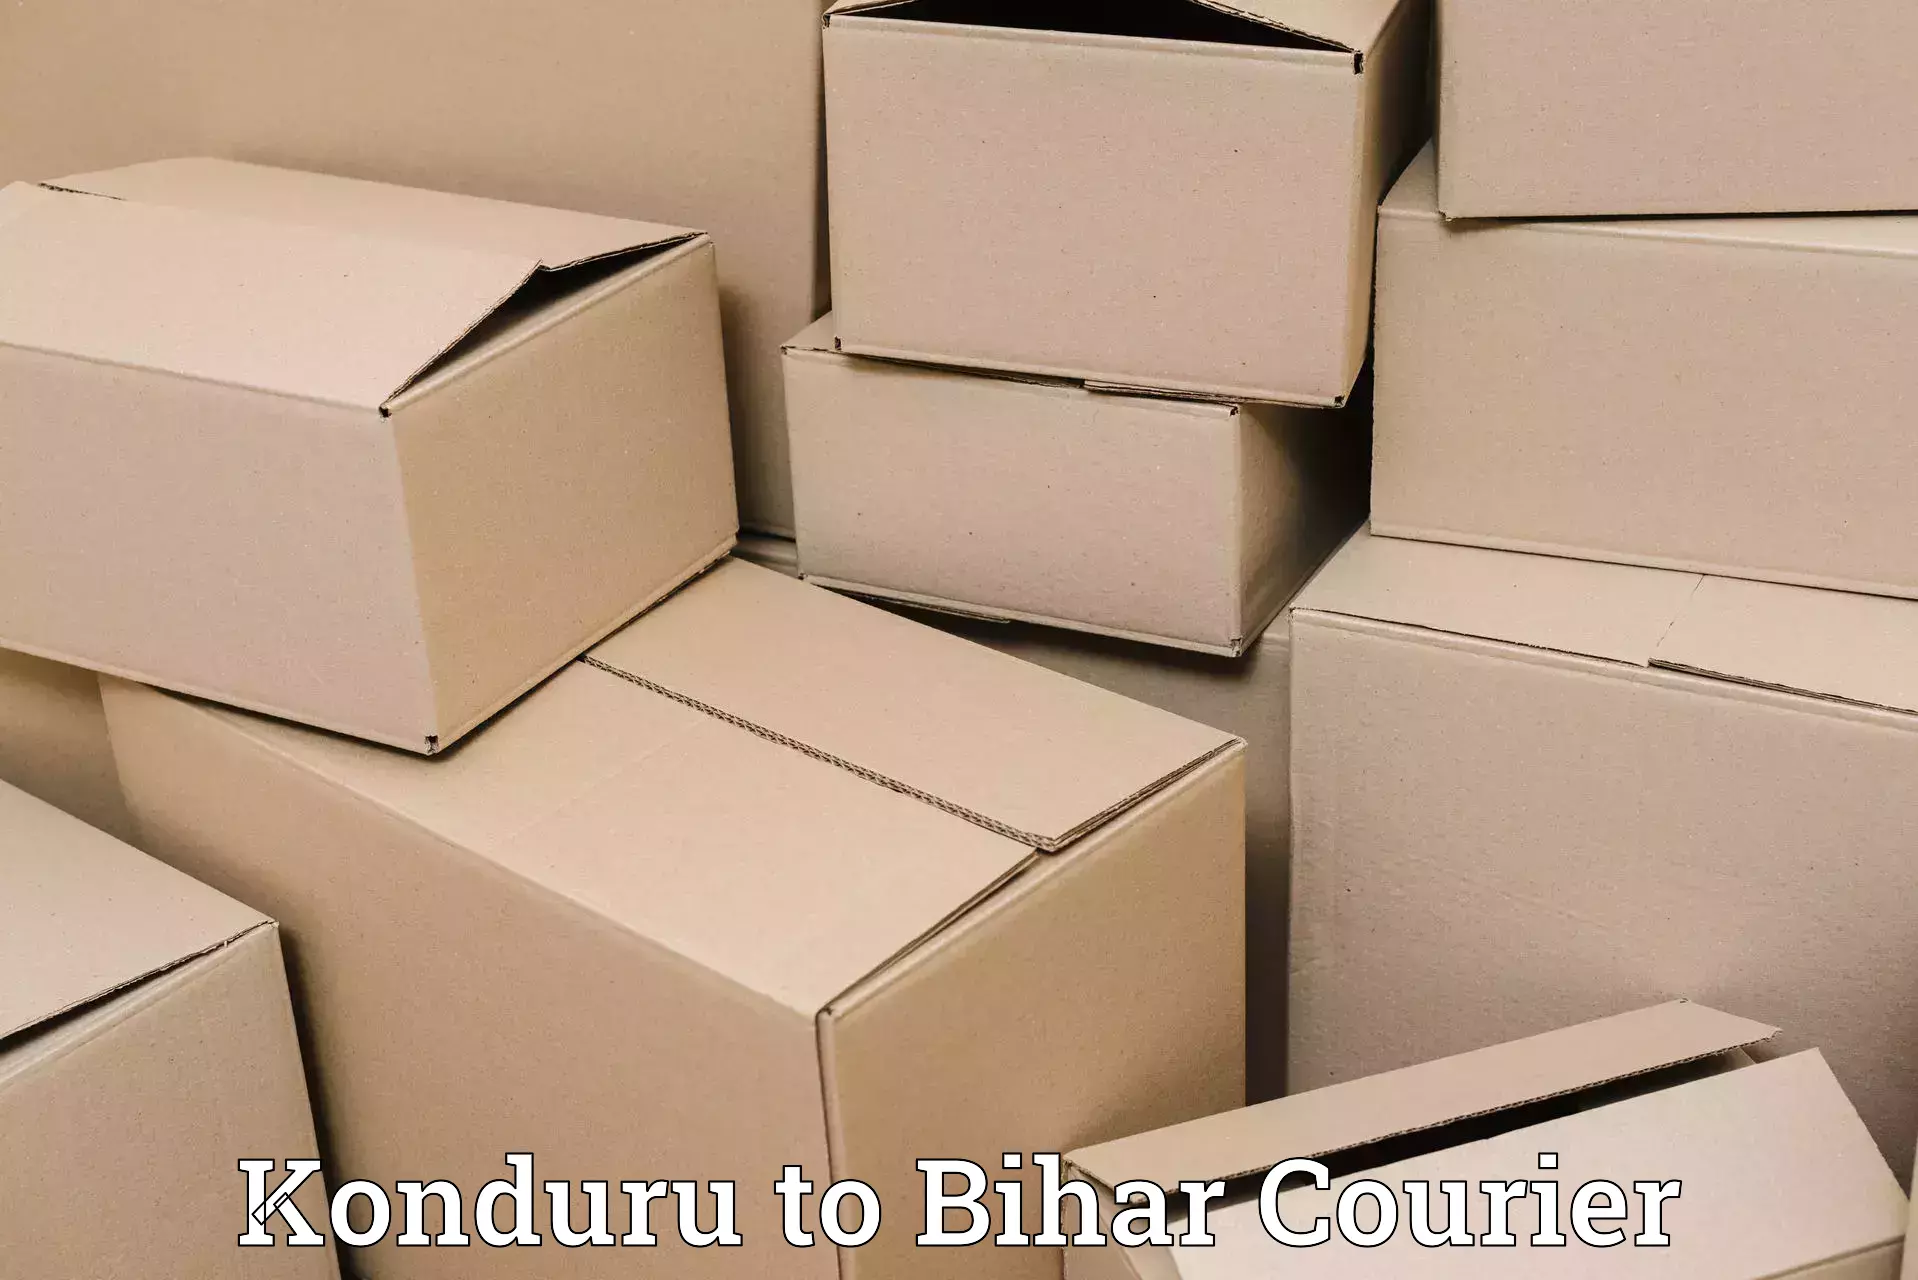 Customer-oriented courier services Konduru to Dinara